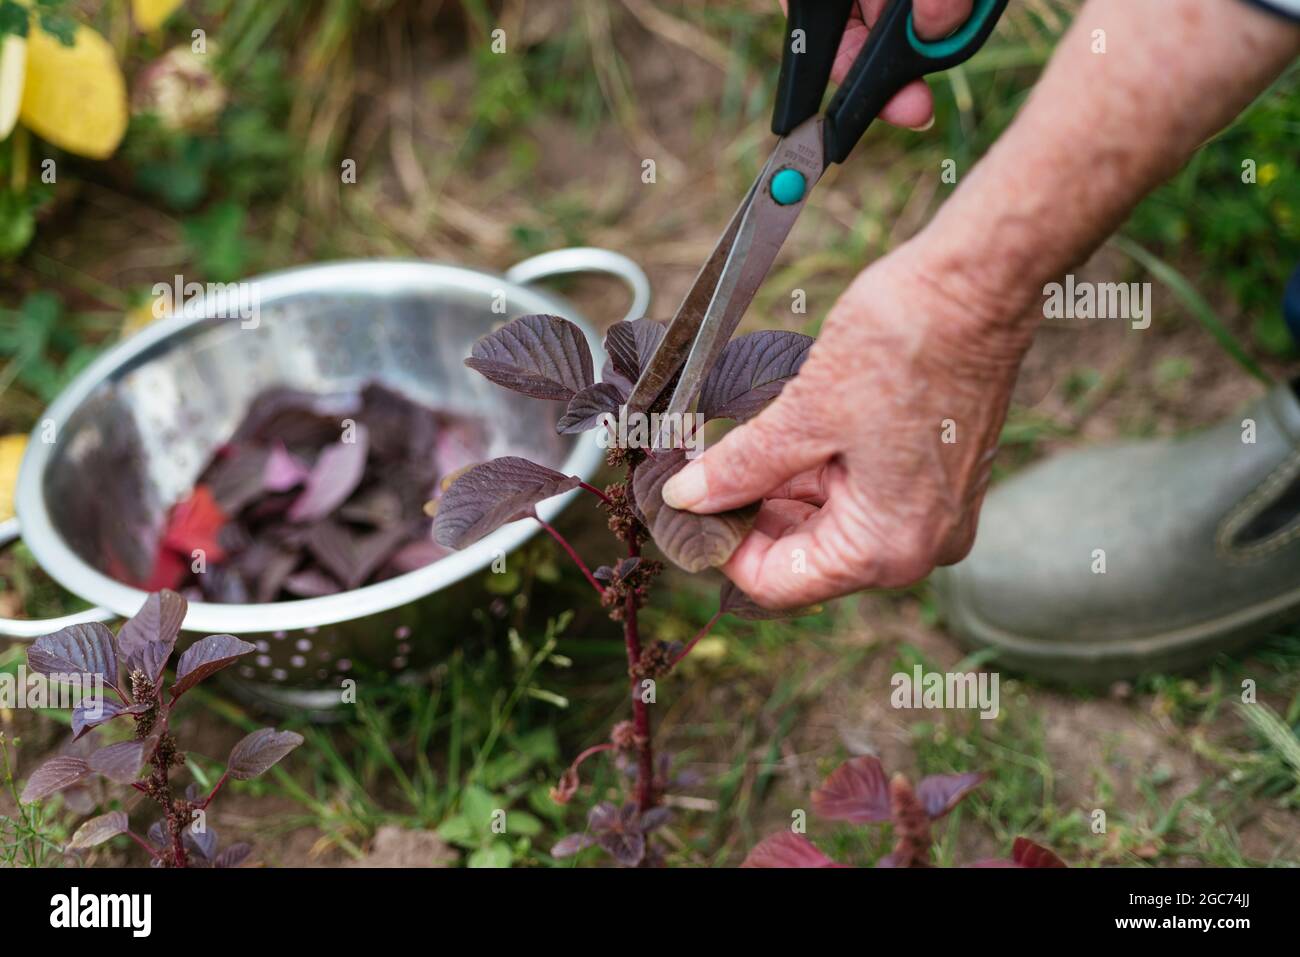 Jardinero cosechando amaranto púrpura (Amaranthus blitum). Foto de stock